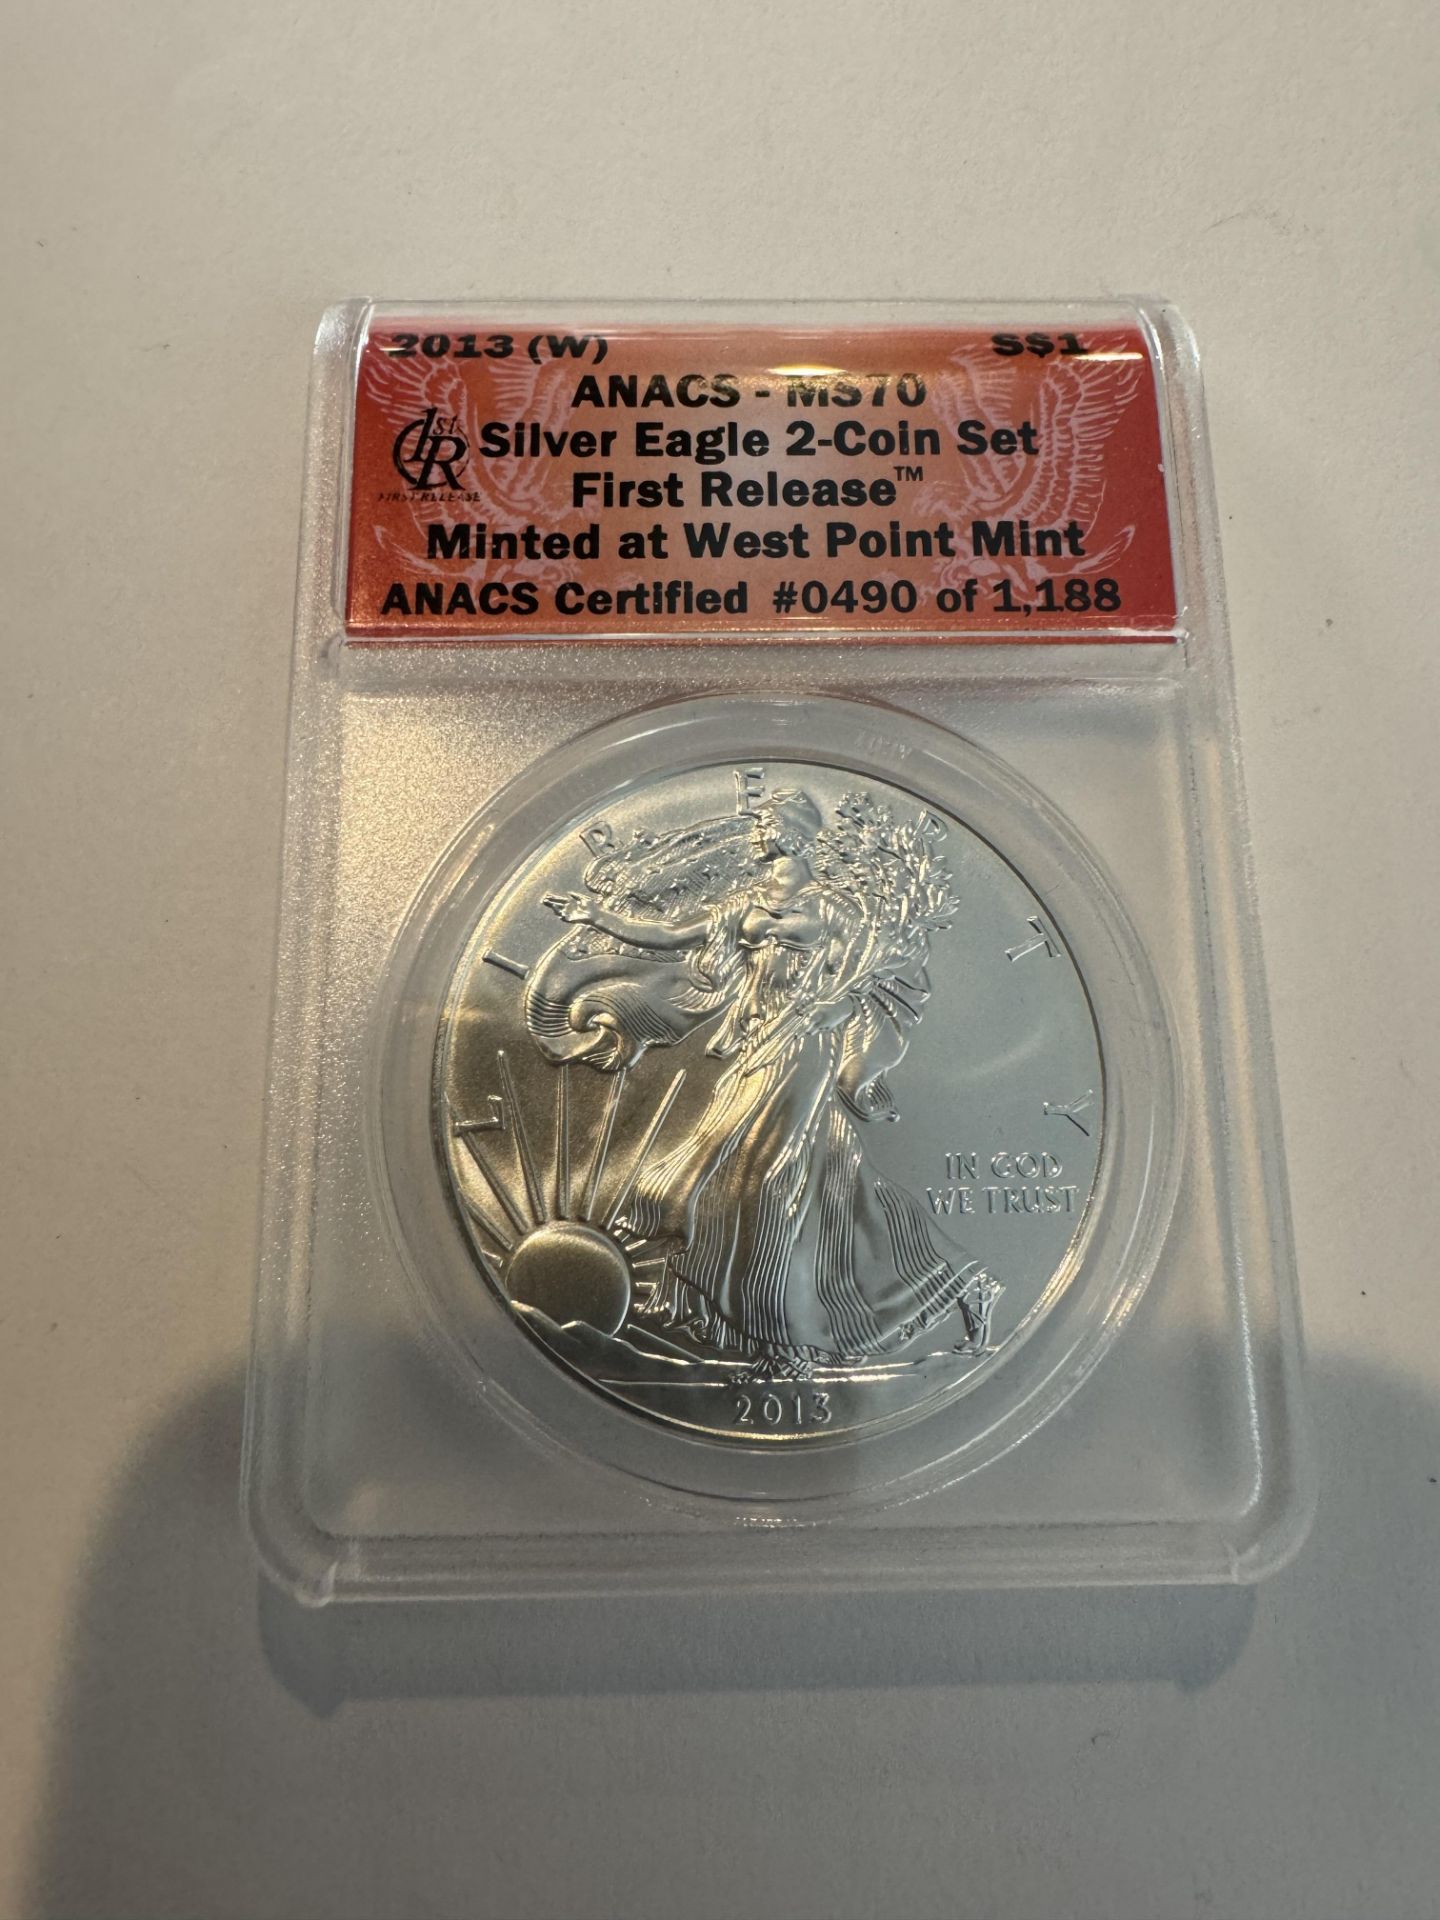 2013 (W) S$1 ANACS - MS70 Silver Eagle 2-Coin Set